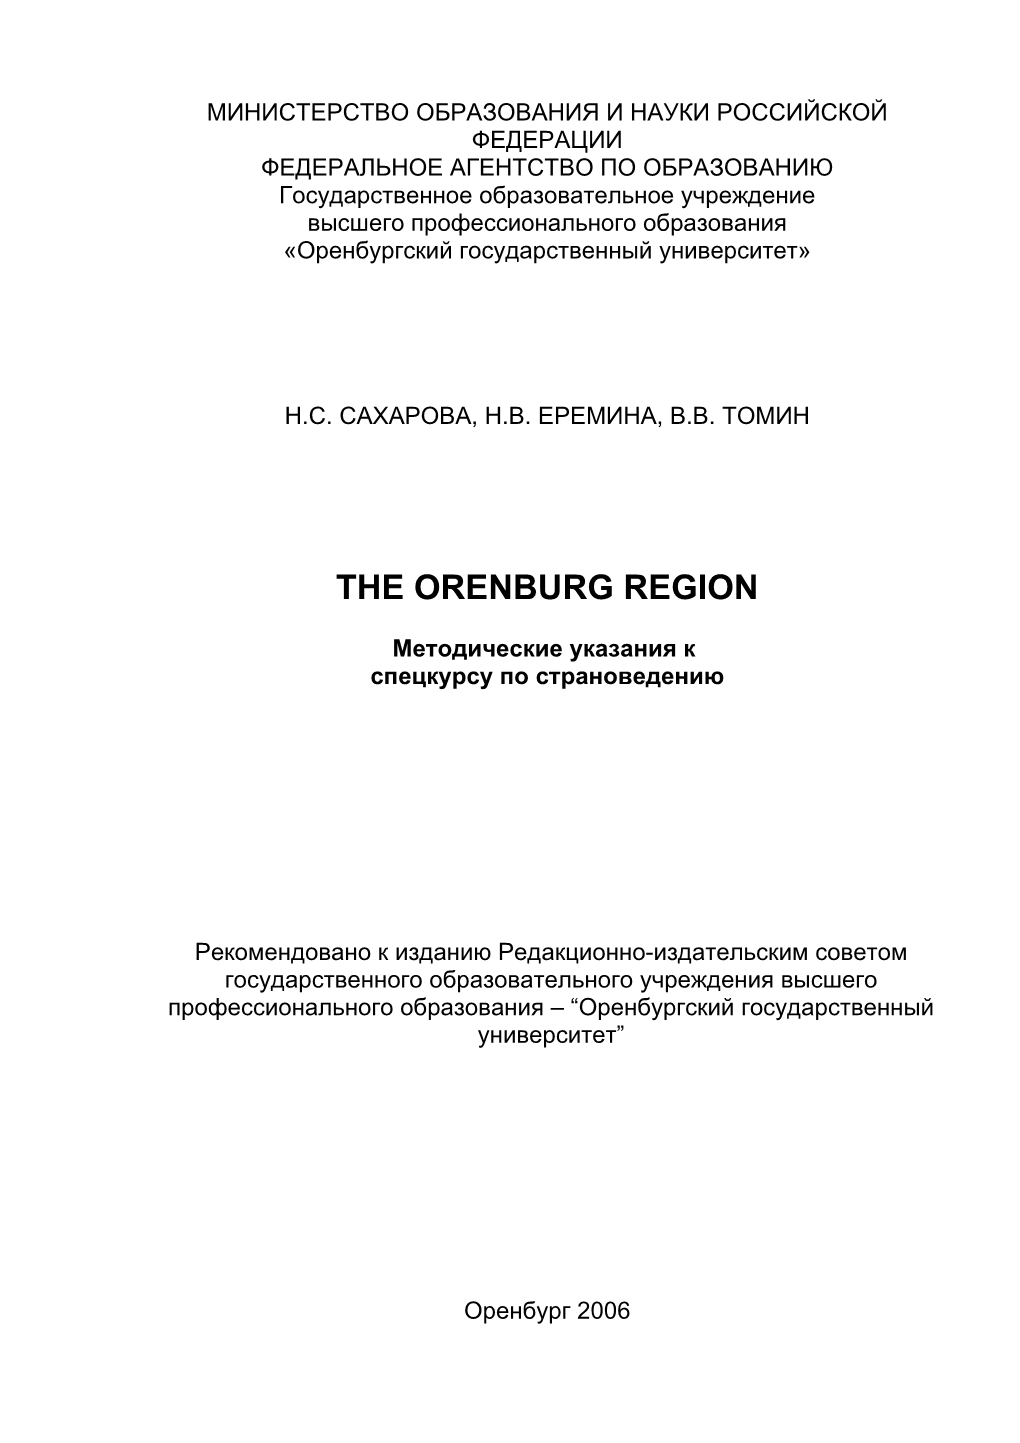 Orenburg Region